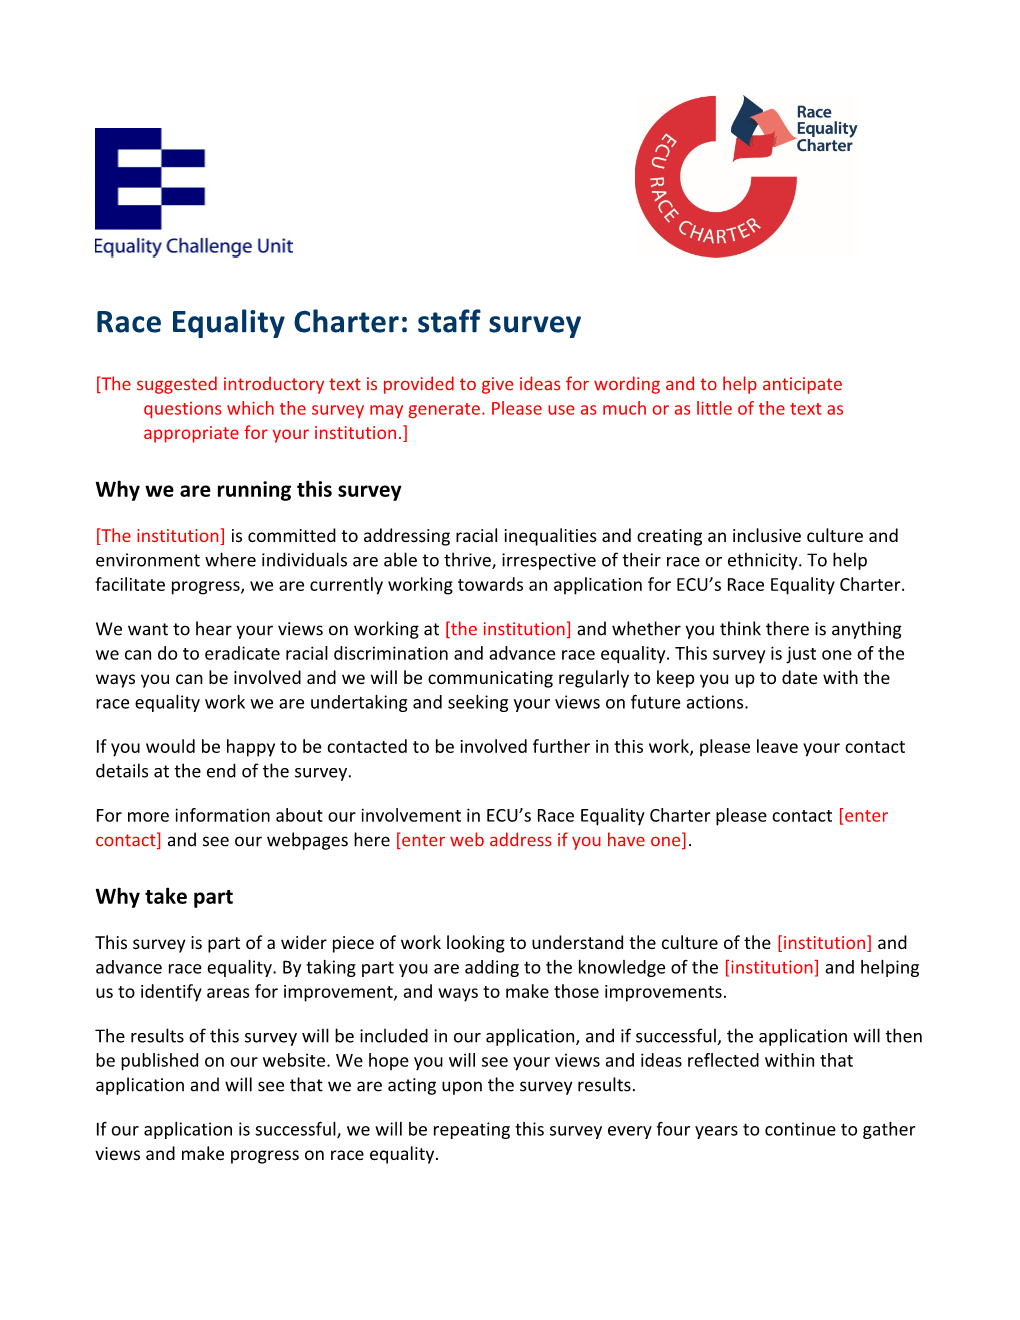 Race Equalitycharter: Staff Survey